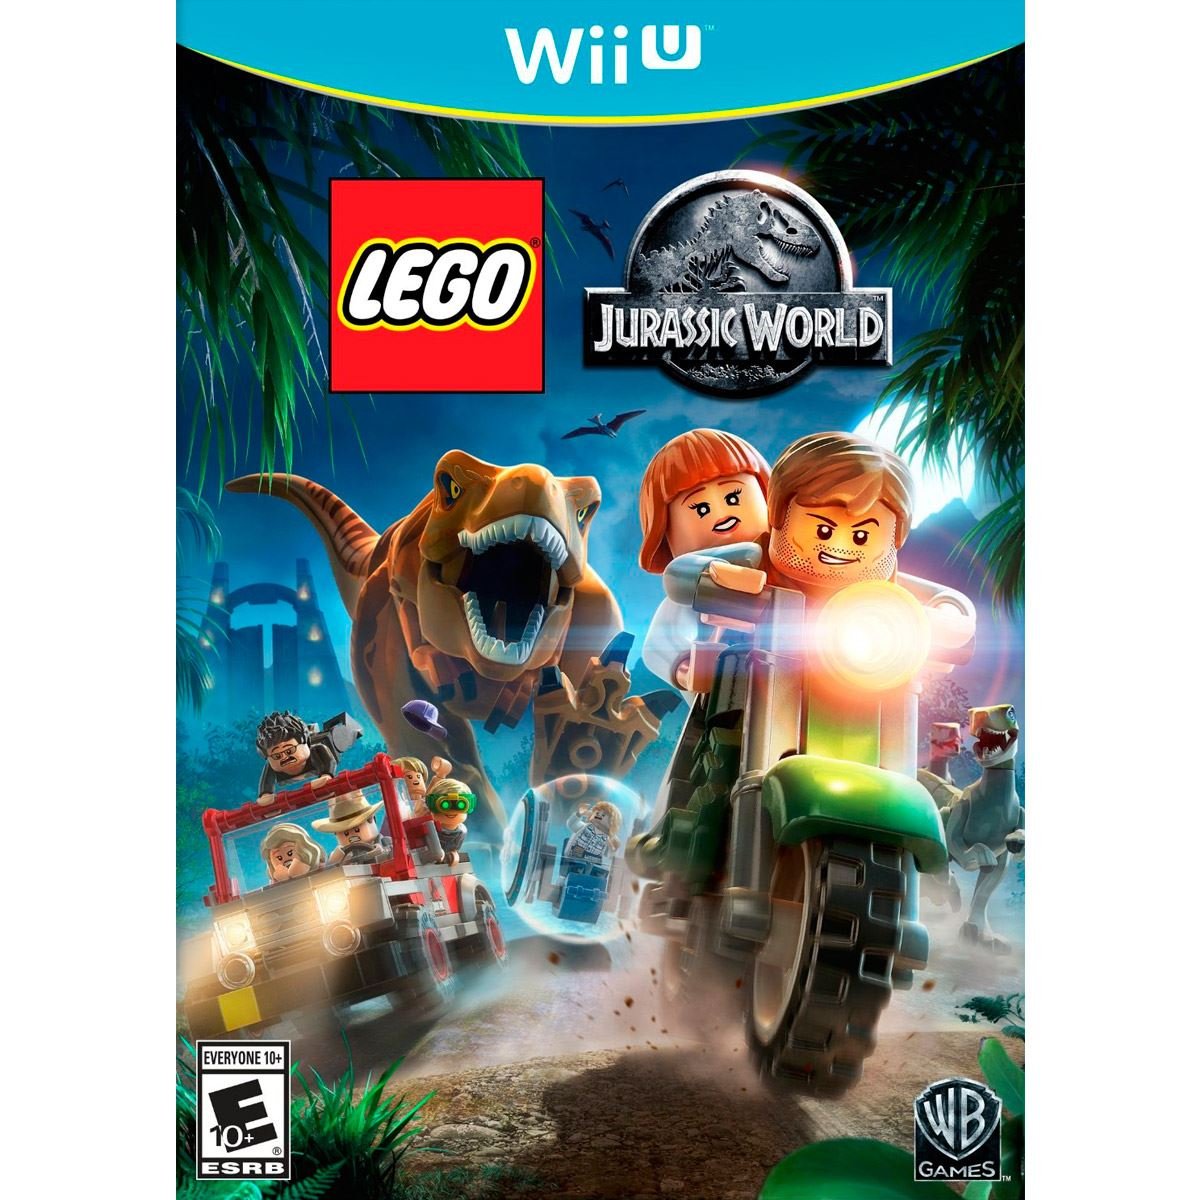 Wii U Lego Jurassic World